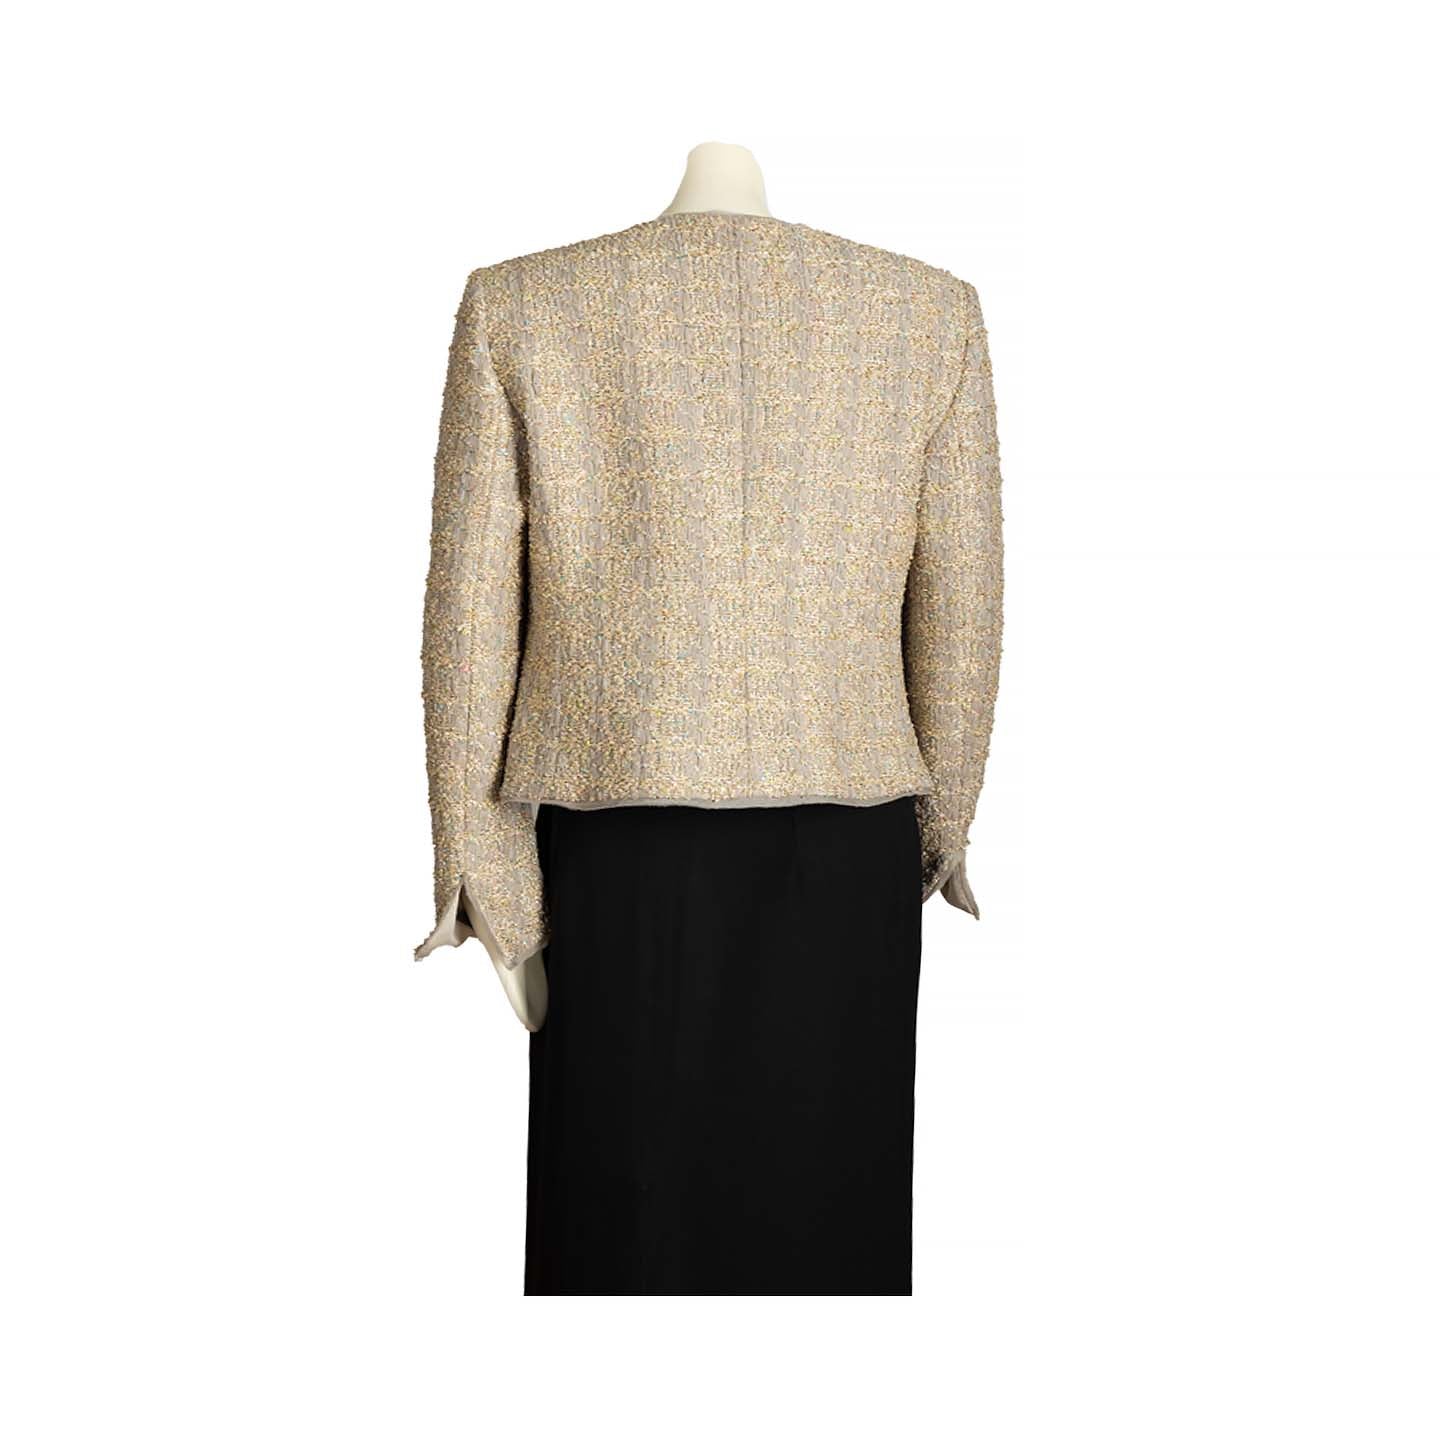 Armani Collezioni tweed jacket - L - 2000s